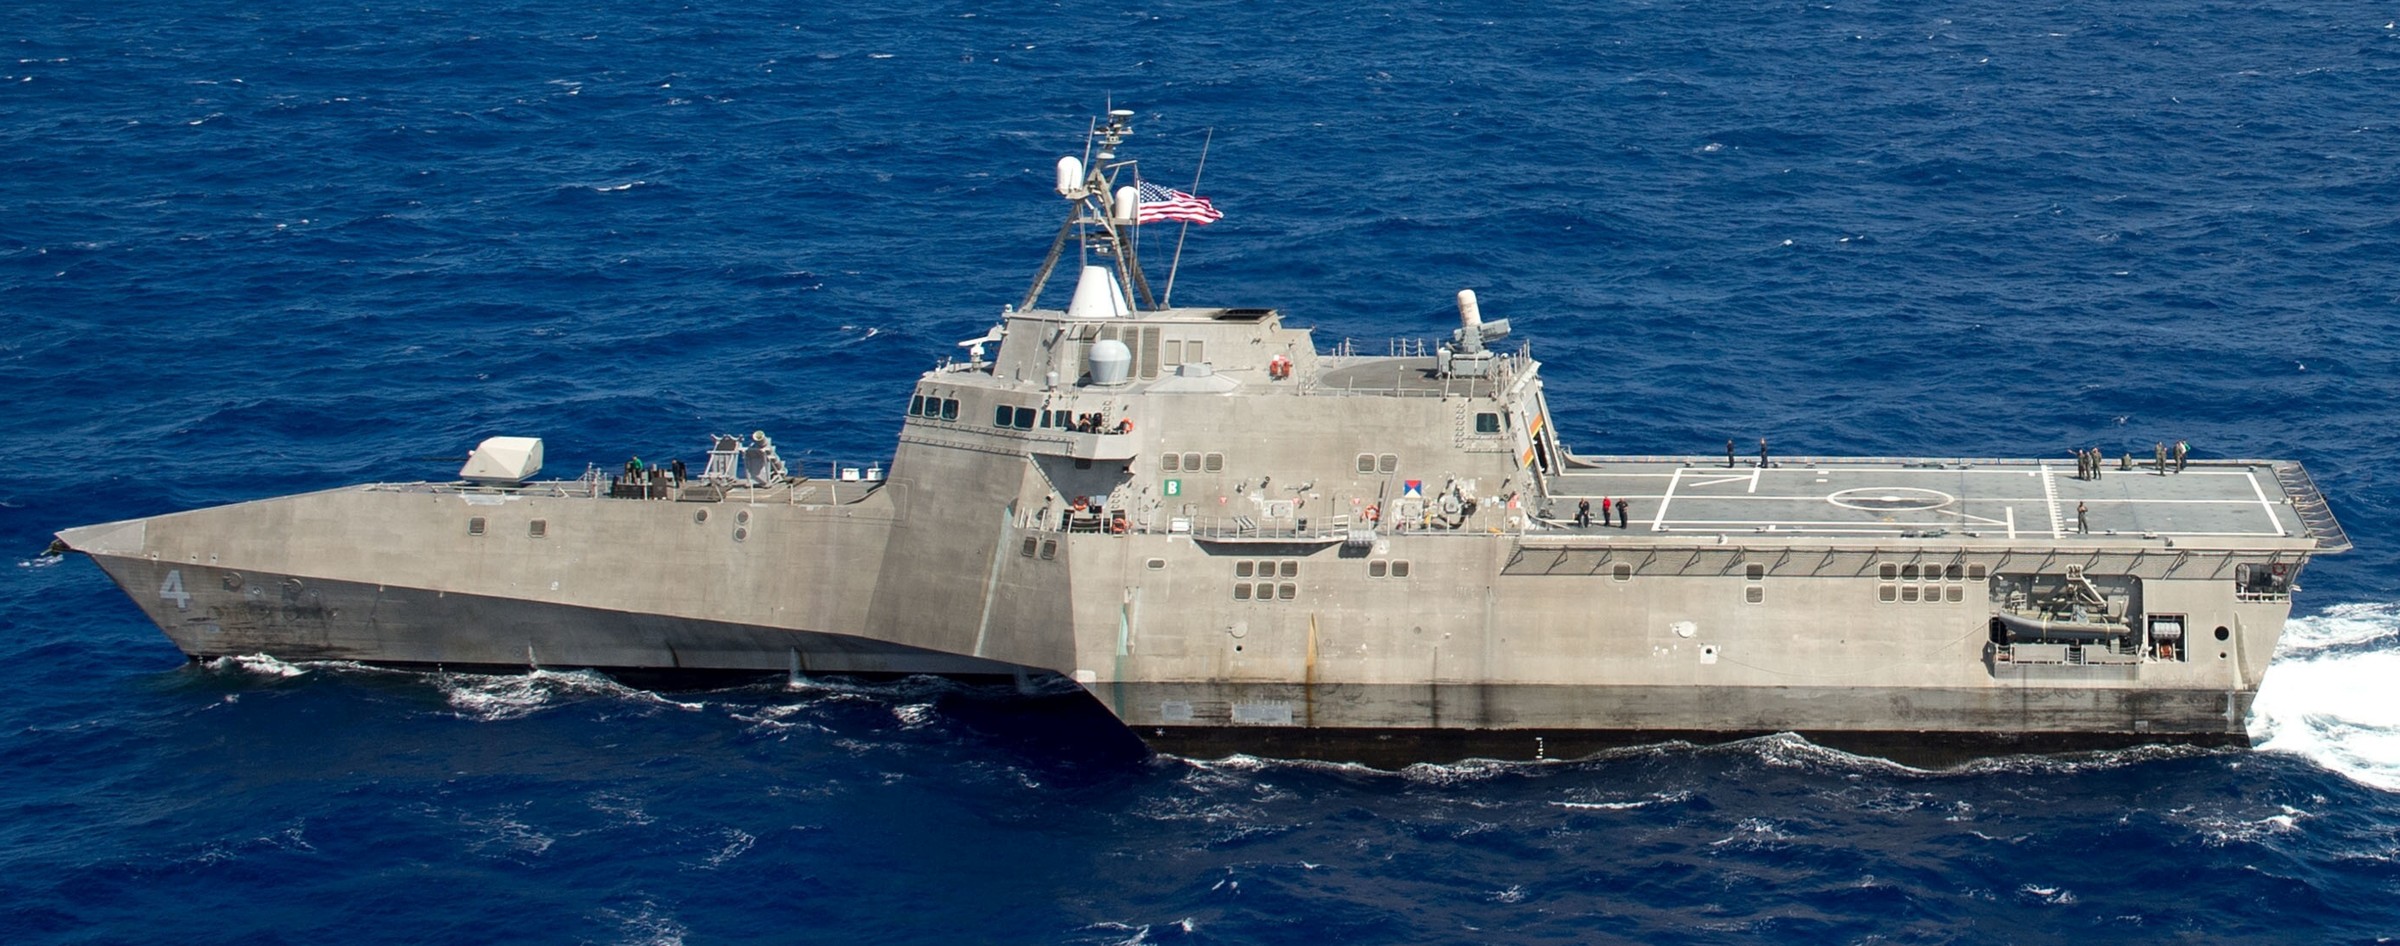 lcs-4 uss coronado independence class littoral combat ship us navy 12 pacific ocean